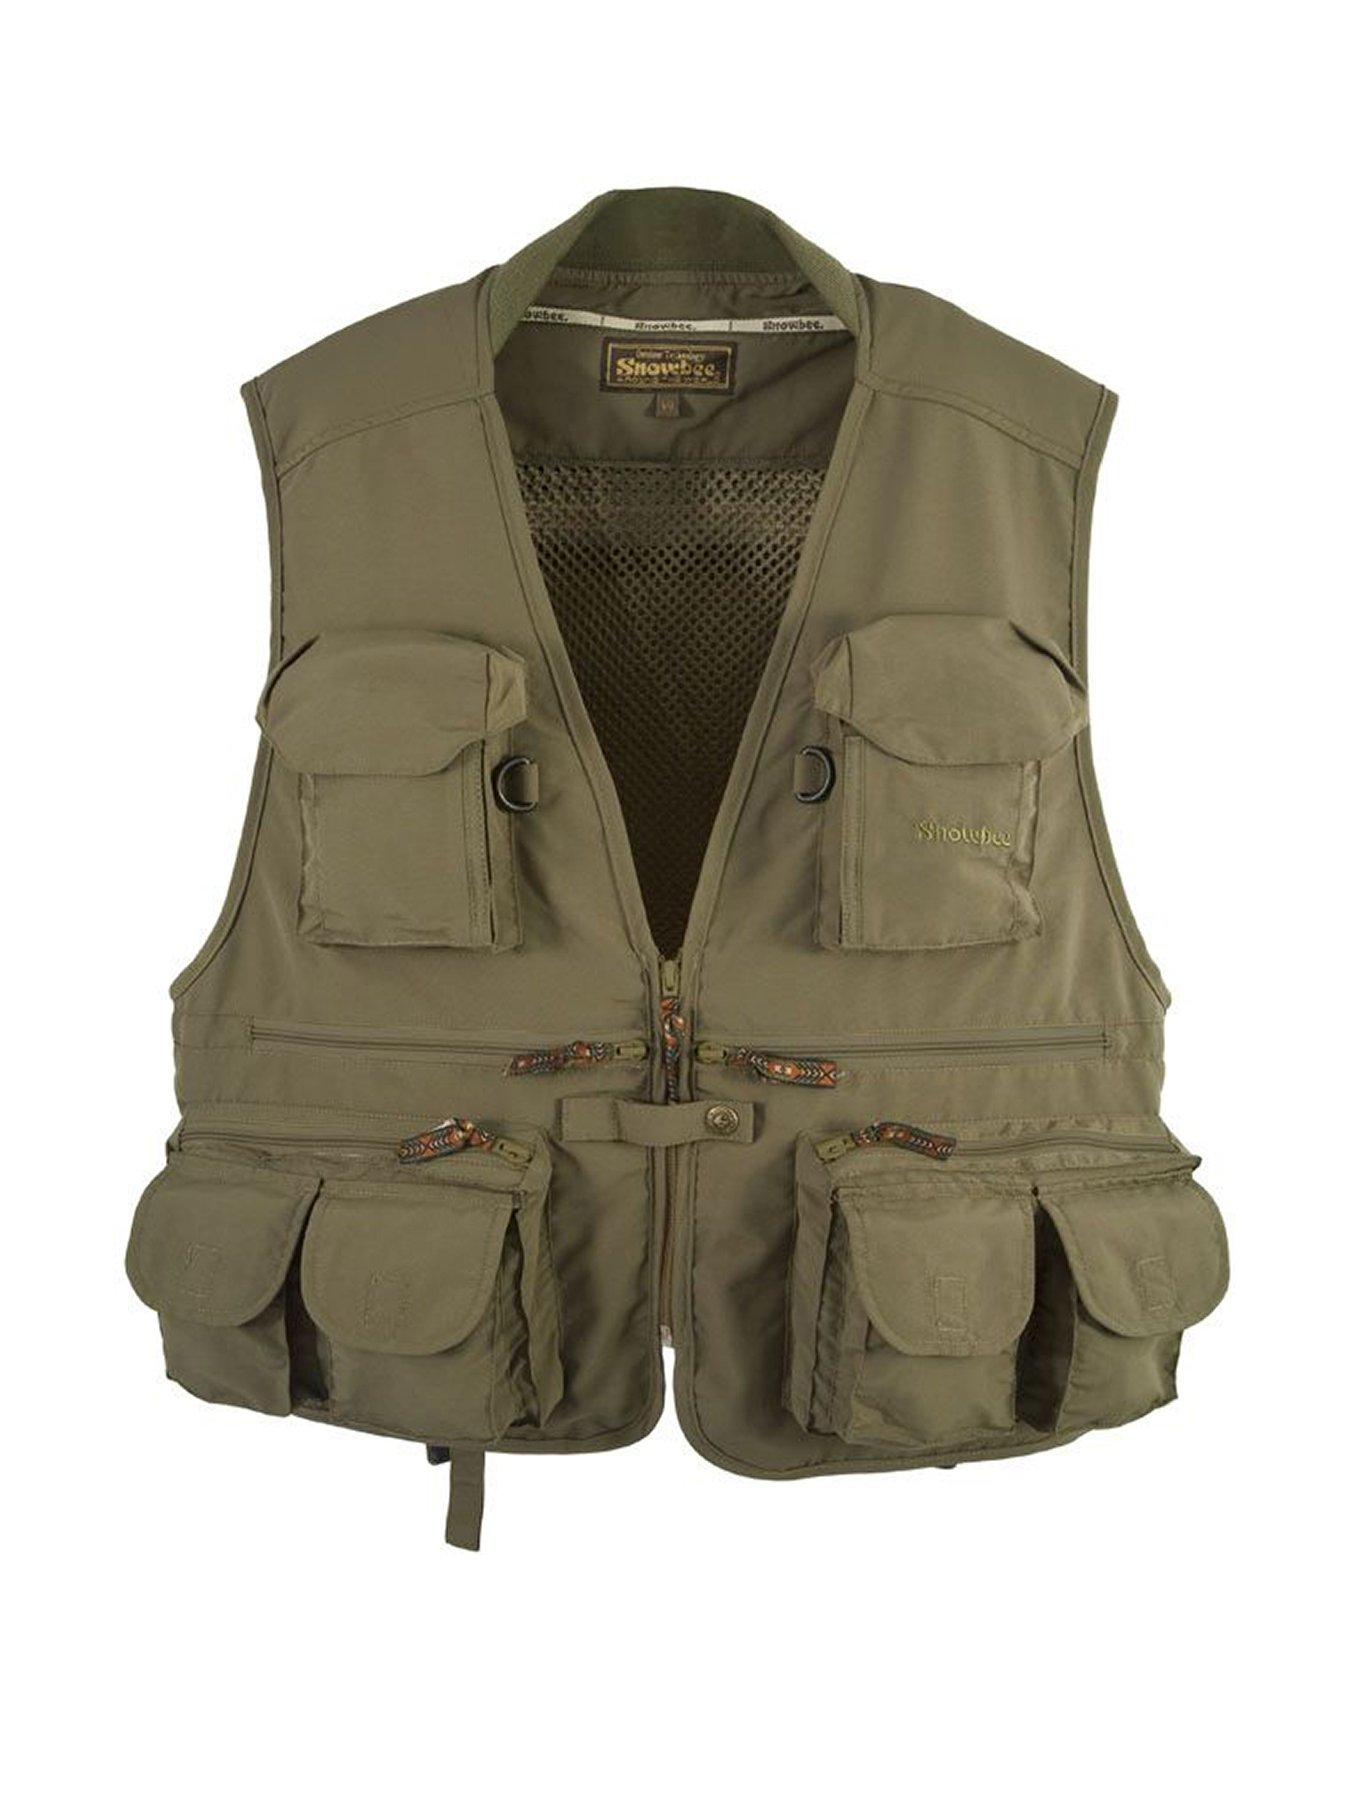 https://media.very.co.uk/i/very/VR7YH_SQ1_0000000099_N_A_SLf/snowbee-classic-fly-fishing-vest-waistcoat-olive-green.jpg?$200x200_socialshare$